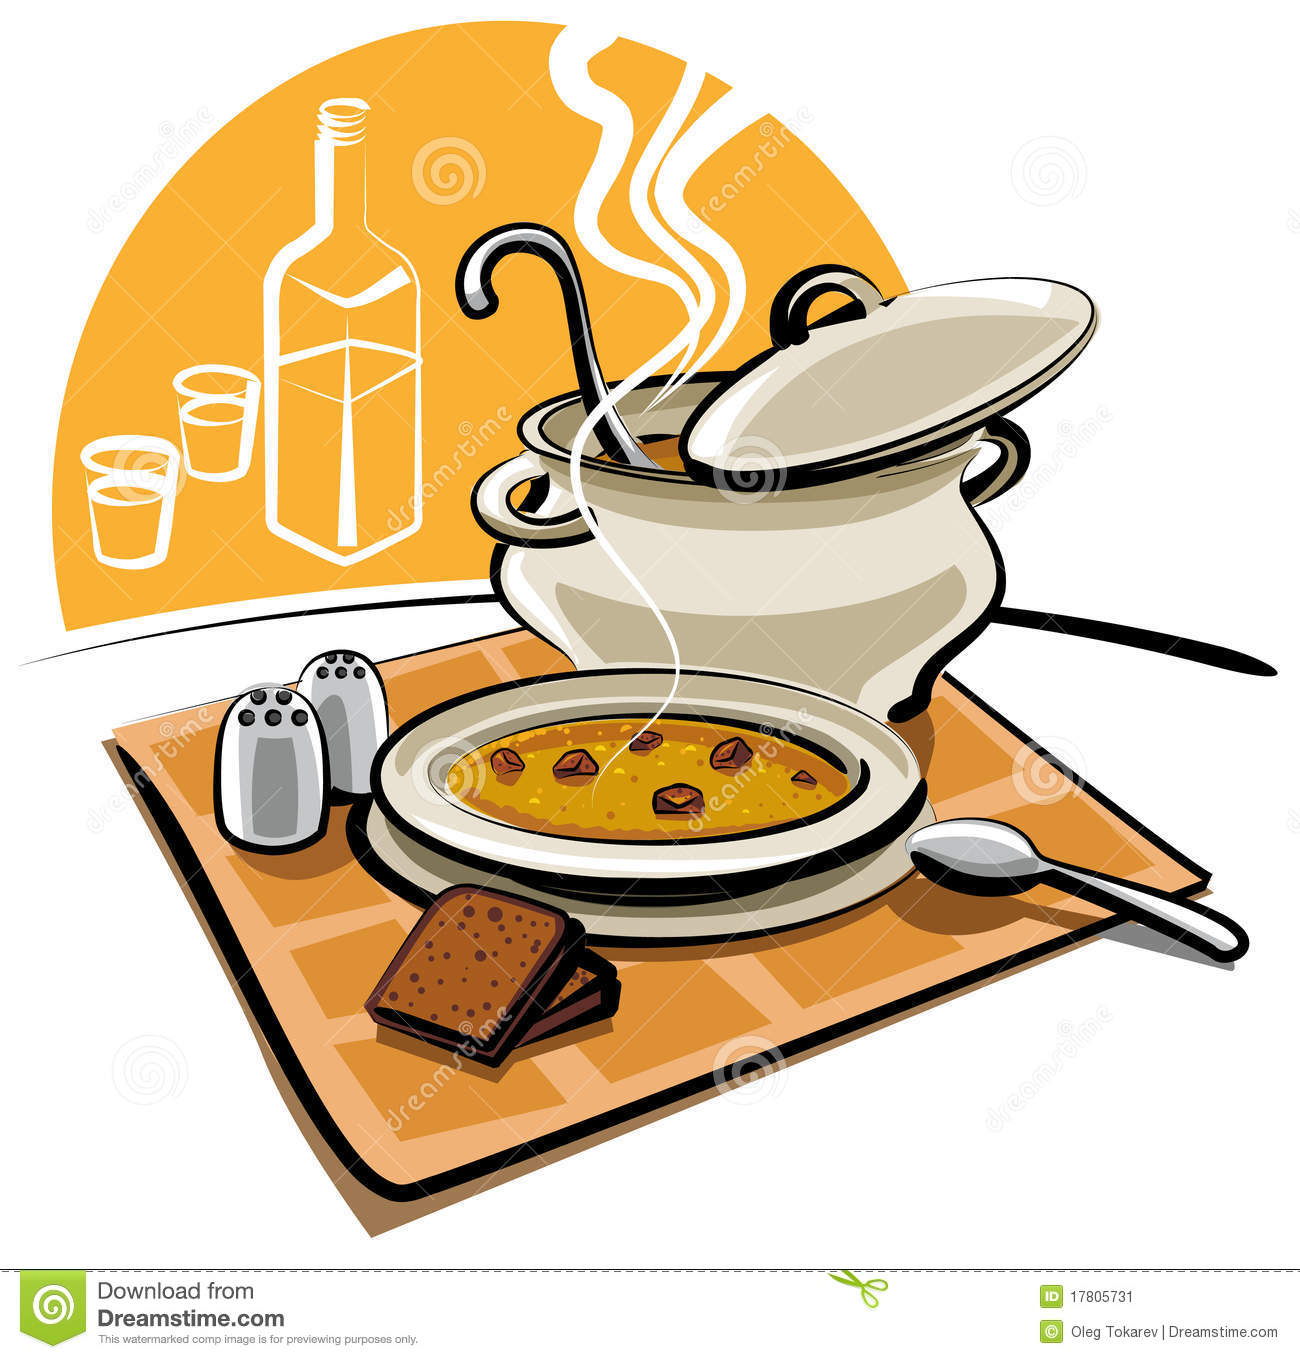 Hot Pea Soup Stock Image   Image  17805731